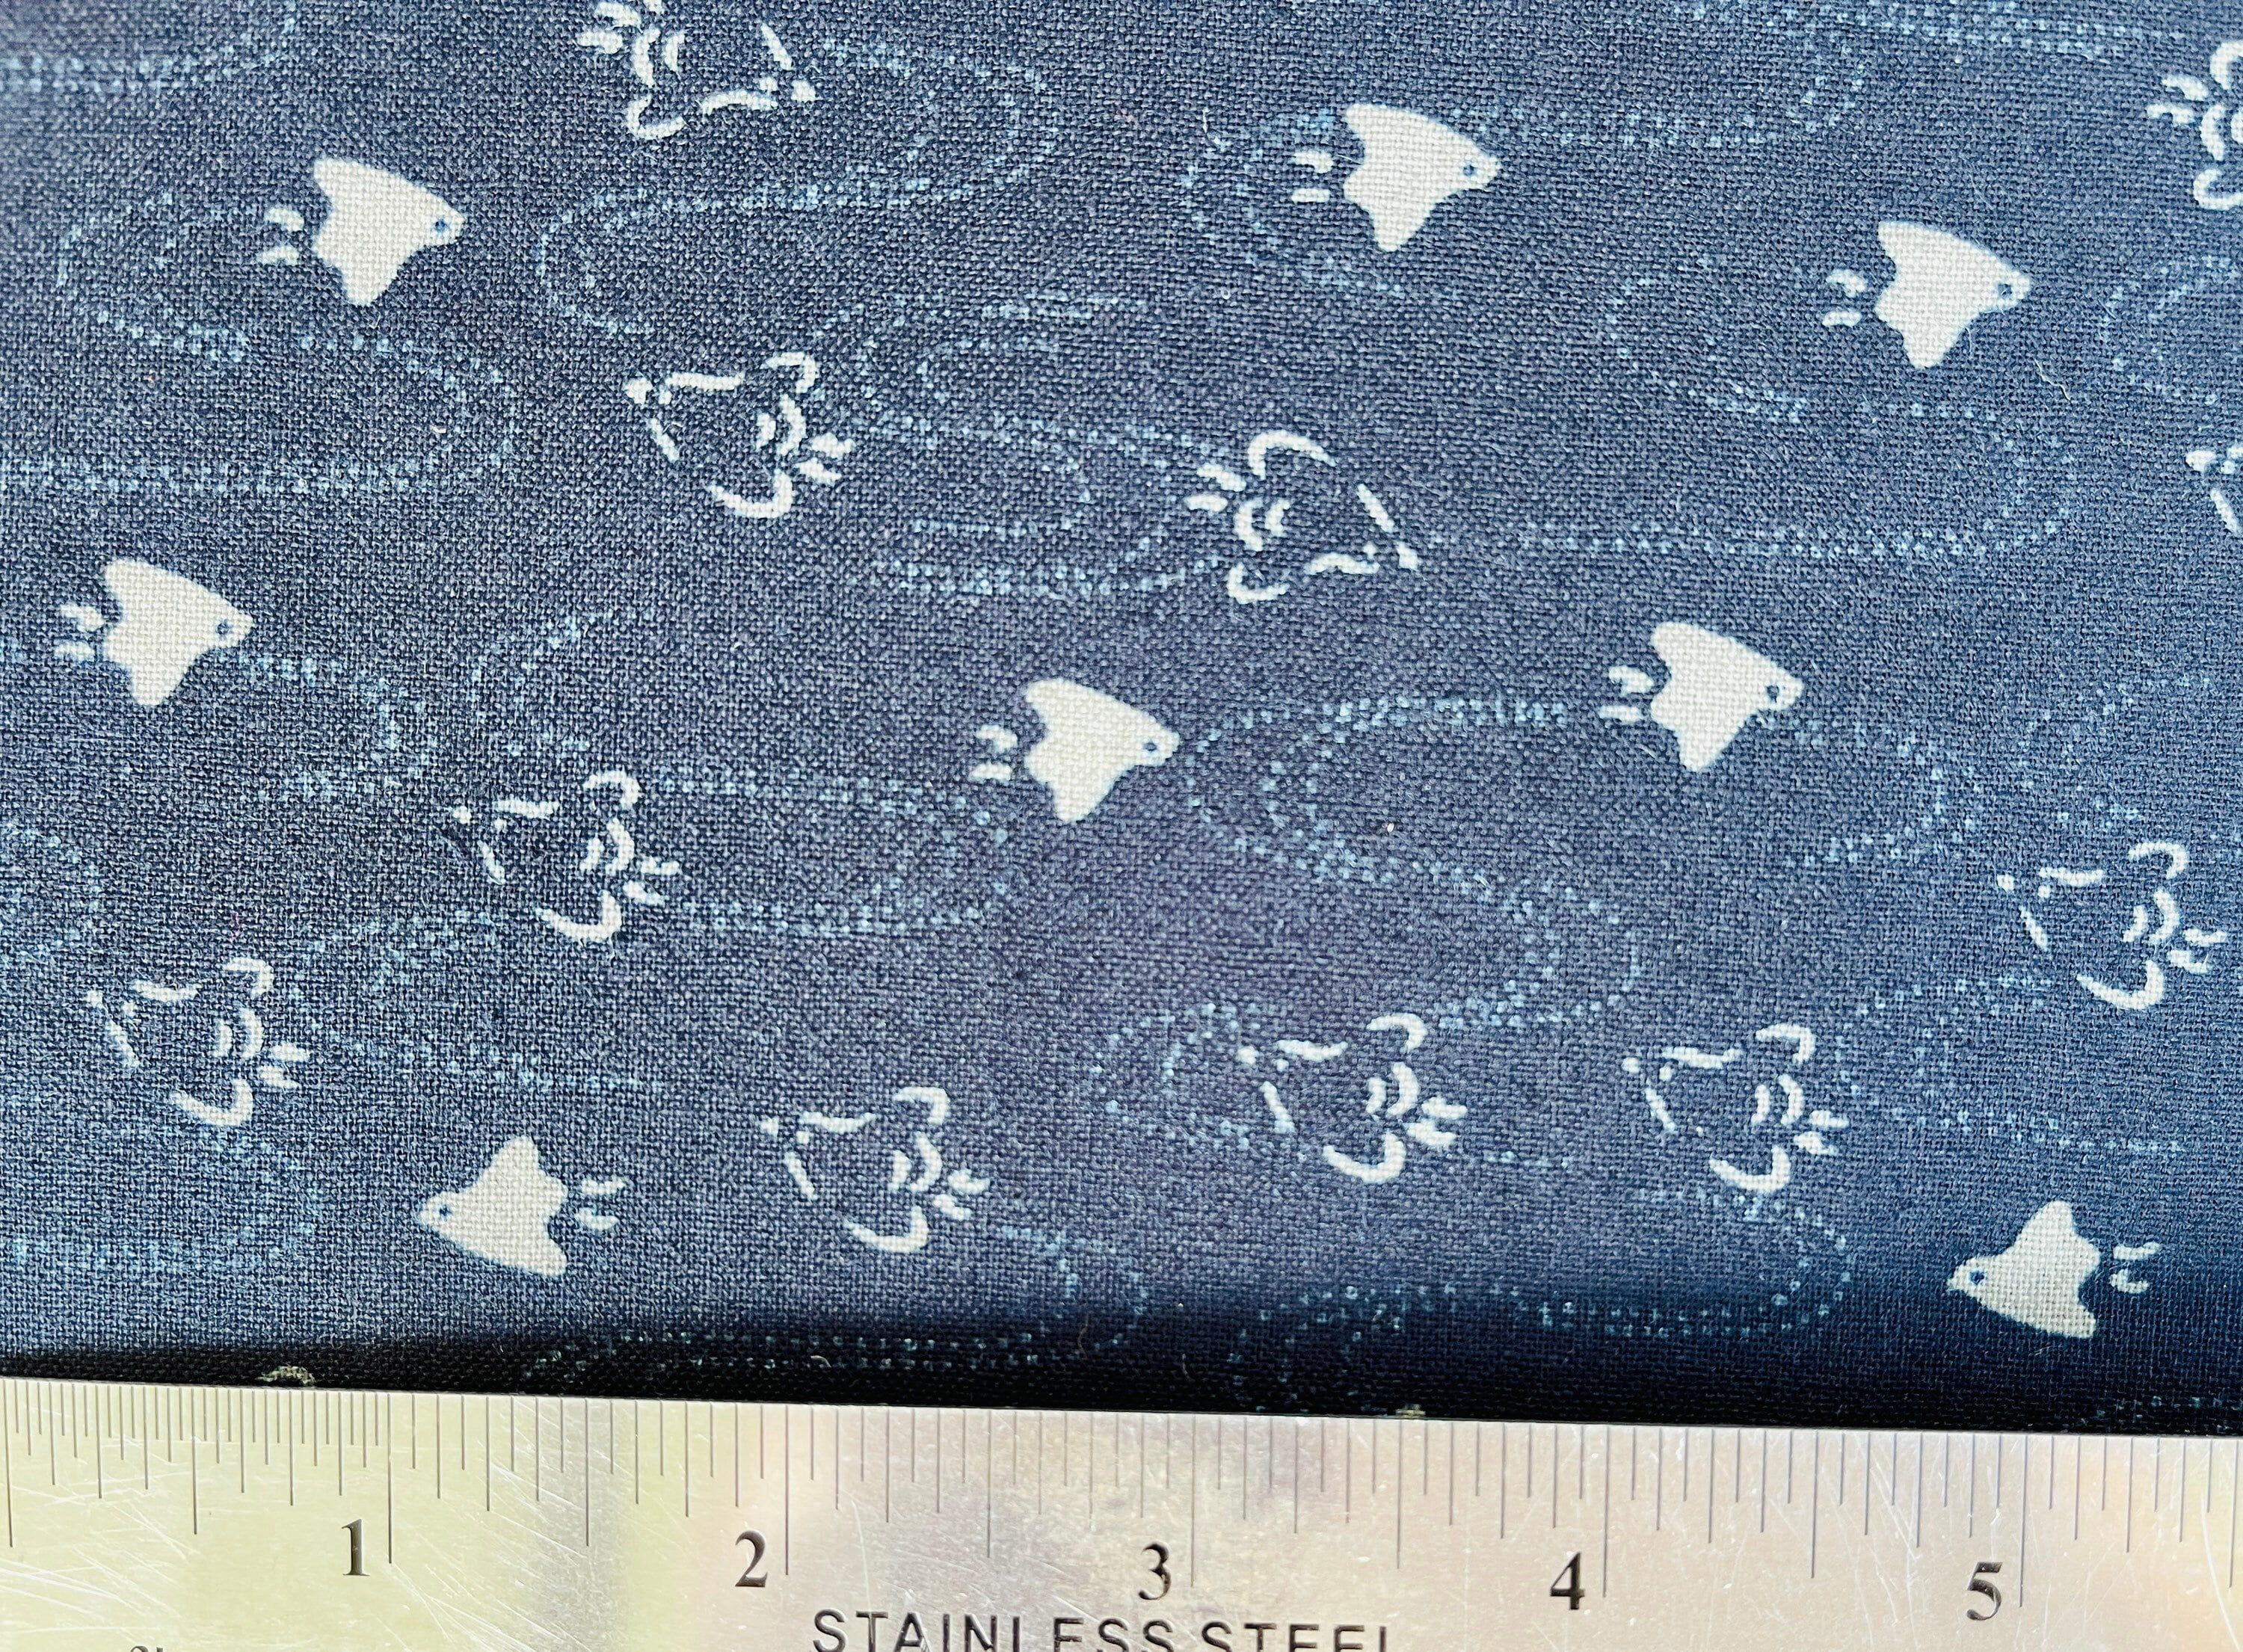 Bird - Bird Fabric - Westex - Sevenberry - Japanese Textile